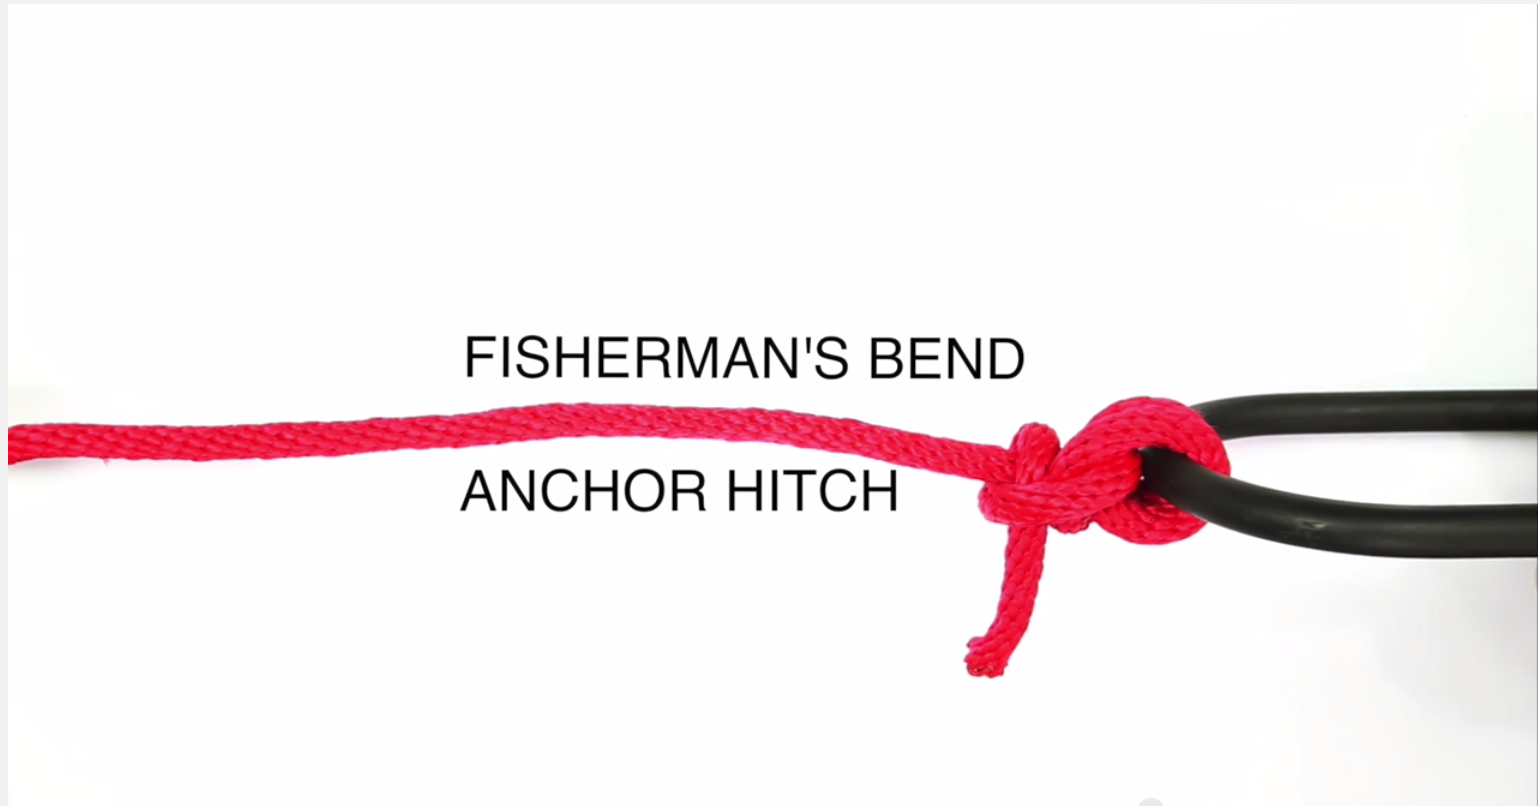 Fisherman's bend